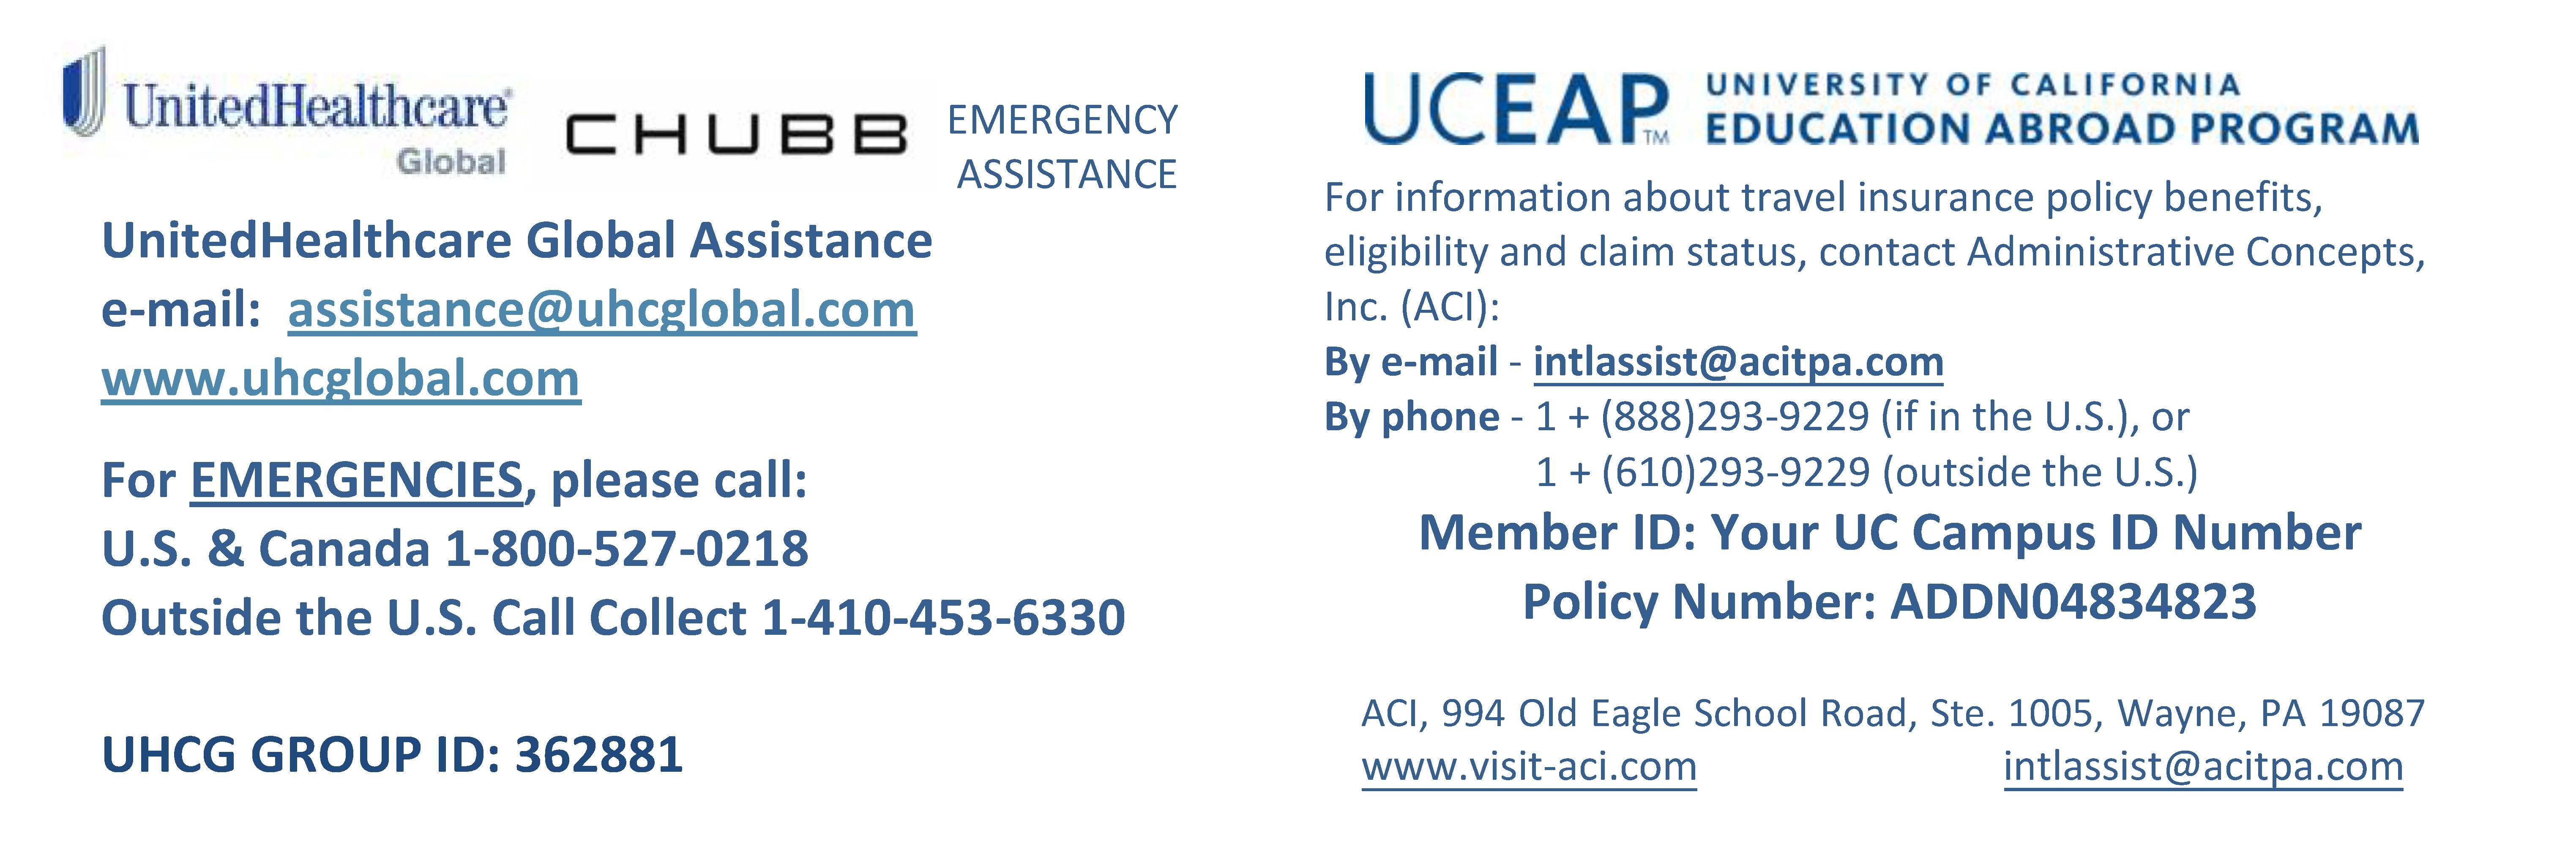 Insurance Document Uceap Travel Card